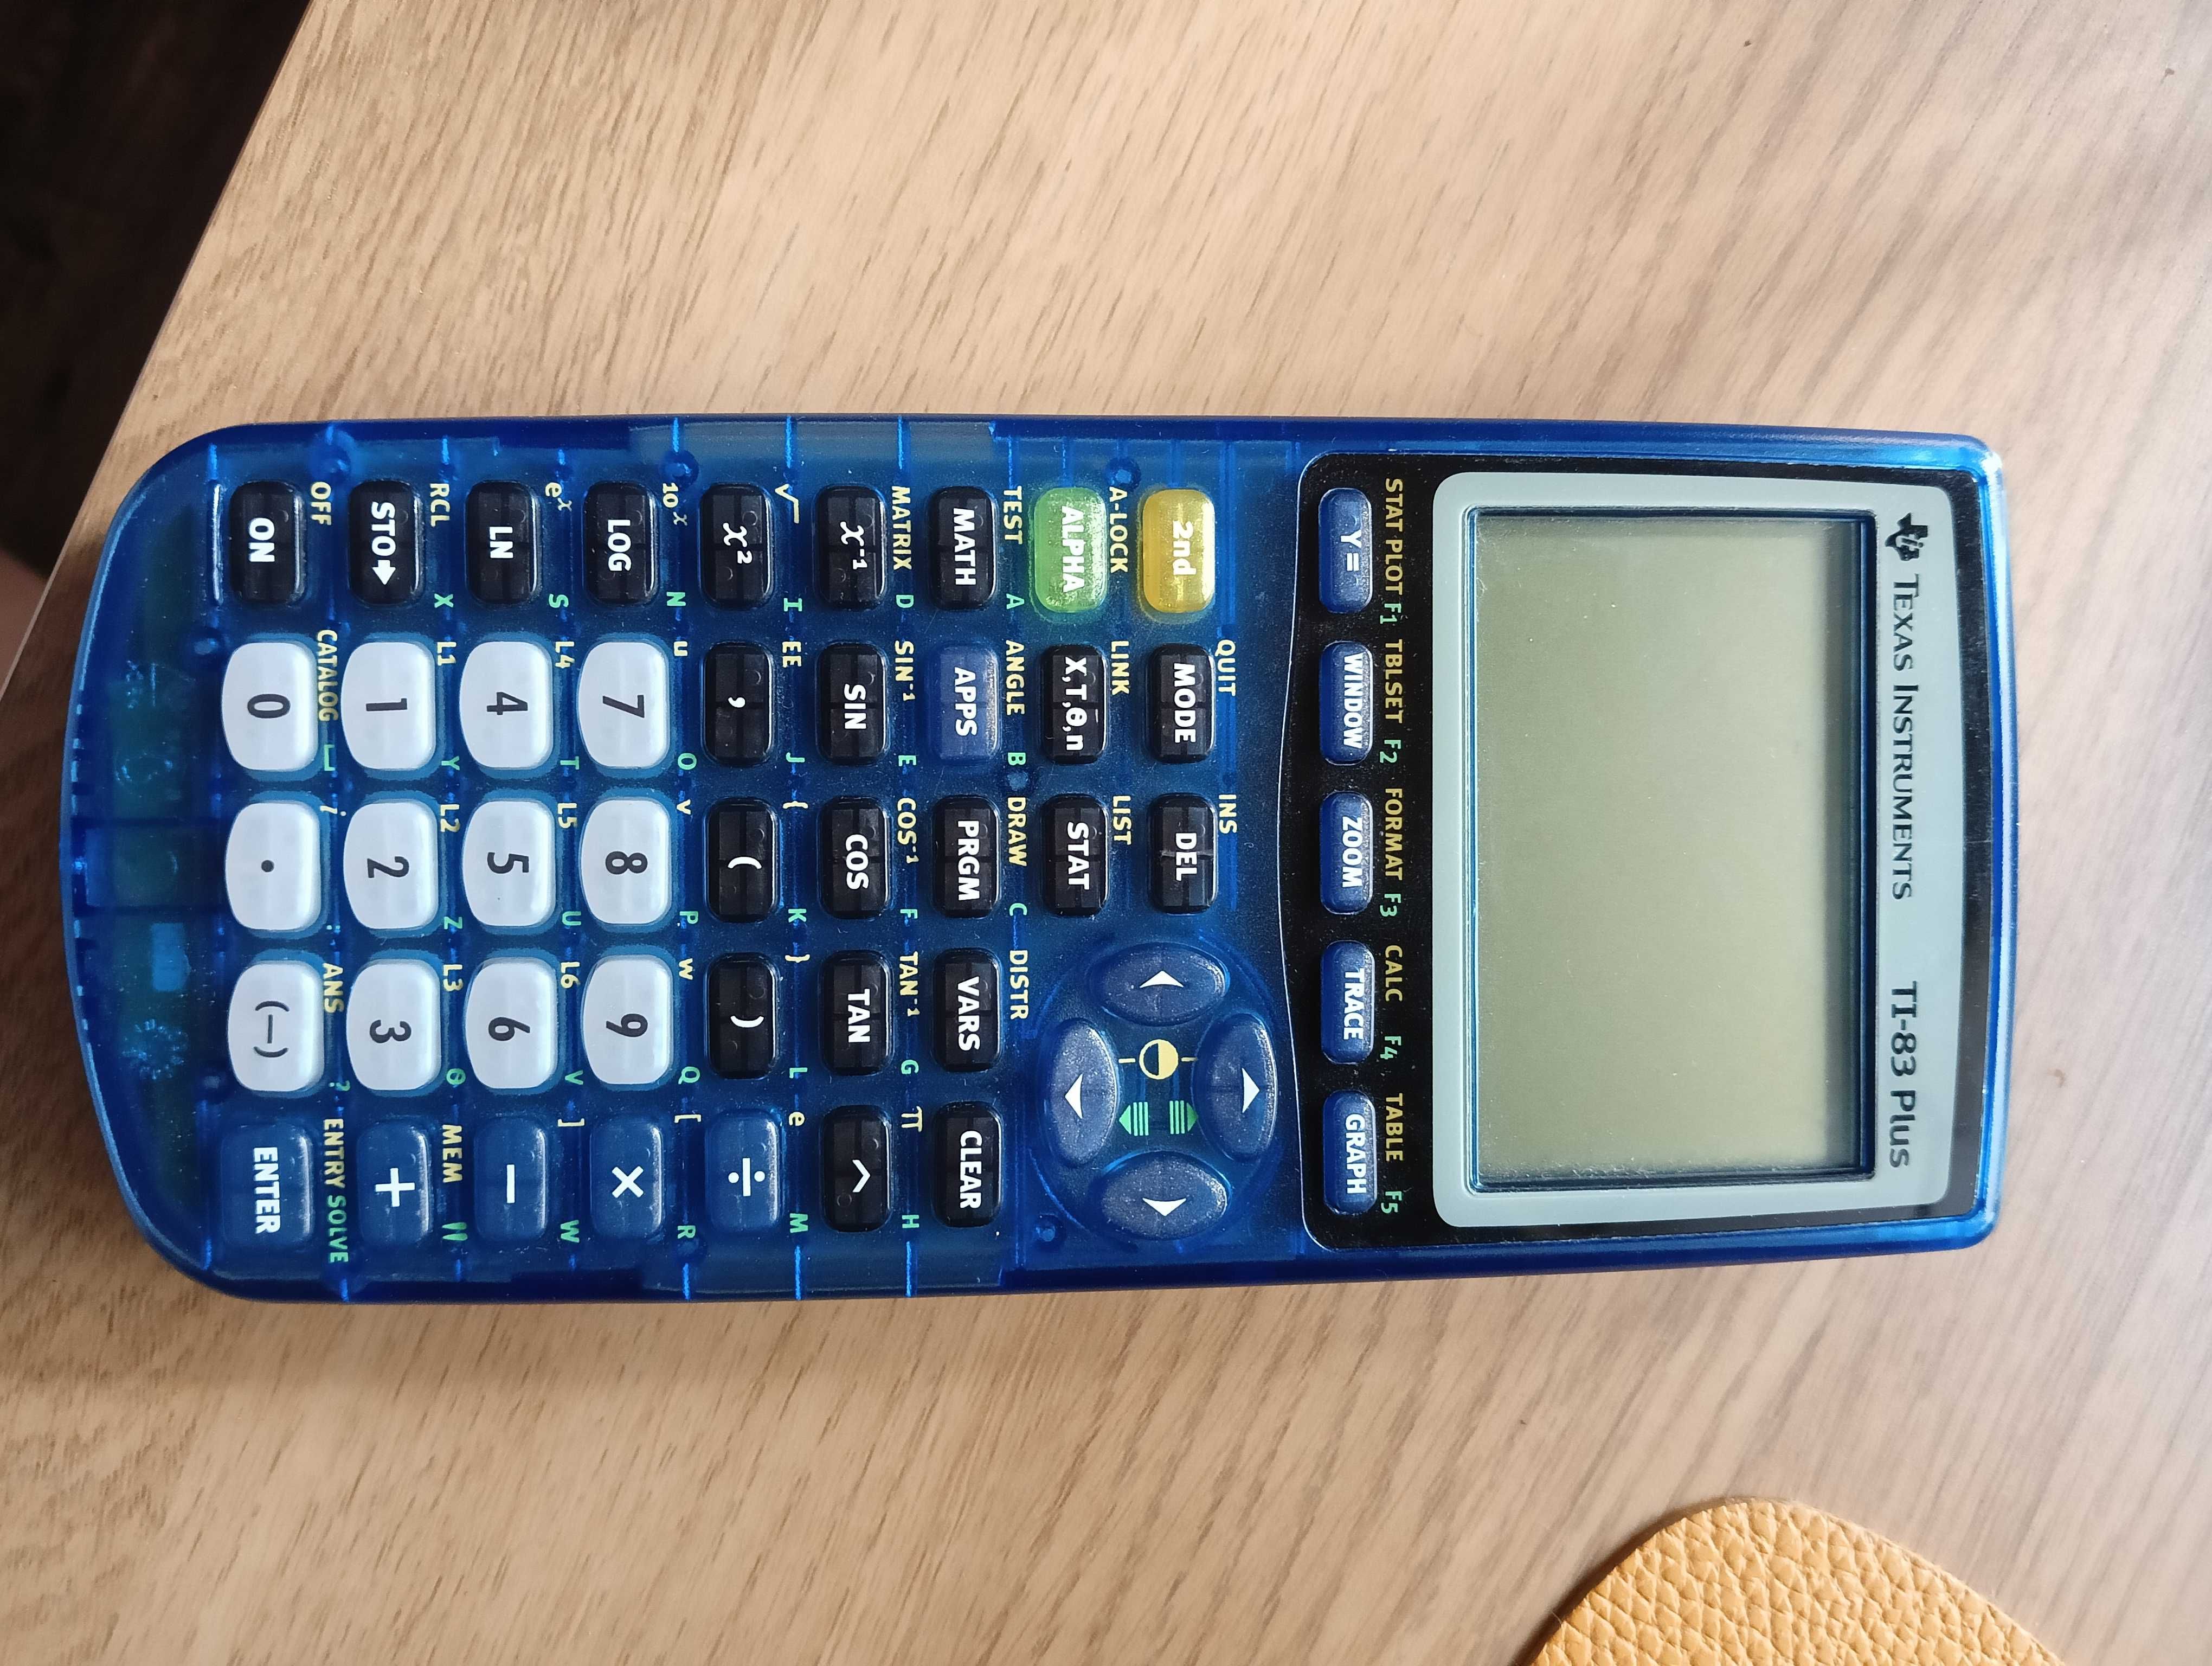 Kalkulator graficzny Texas Instruments TI-83 Plus